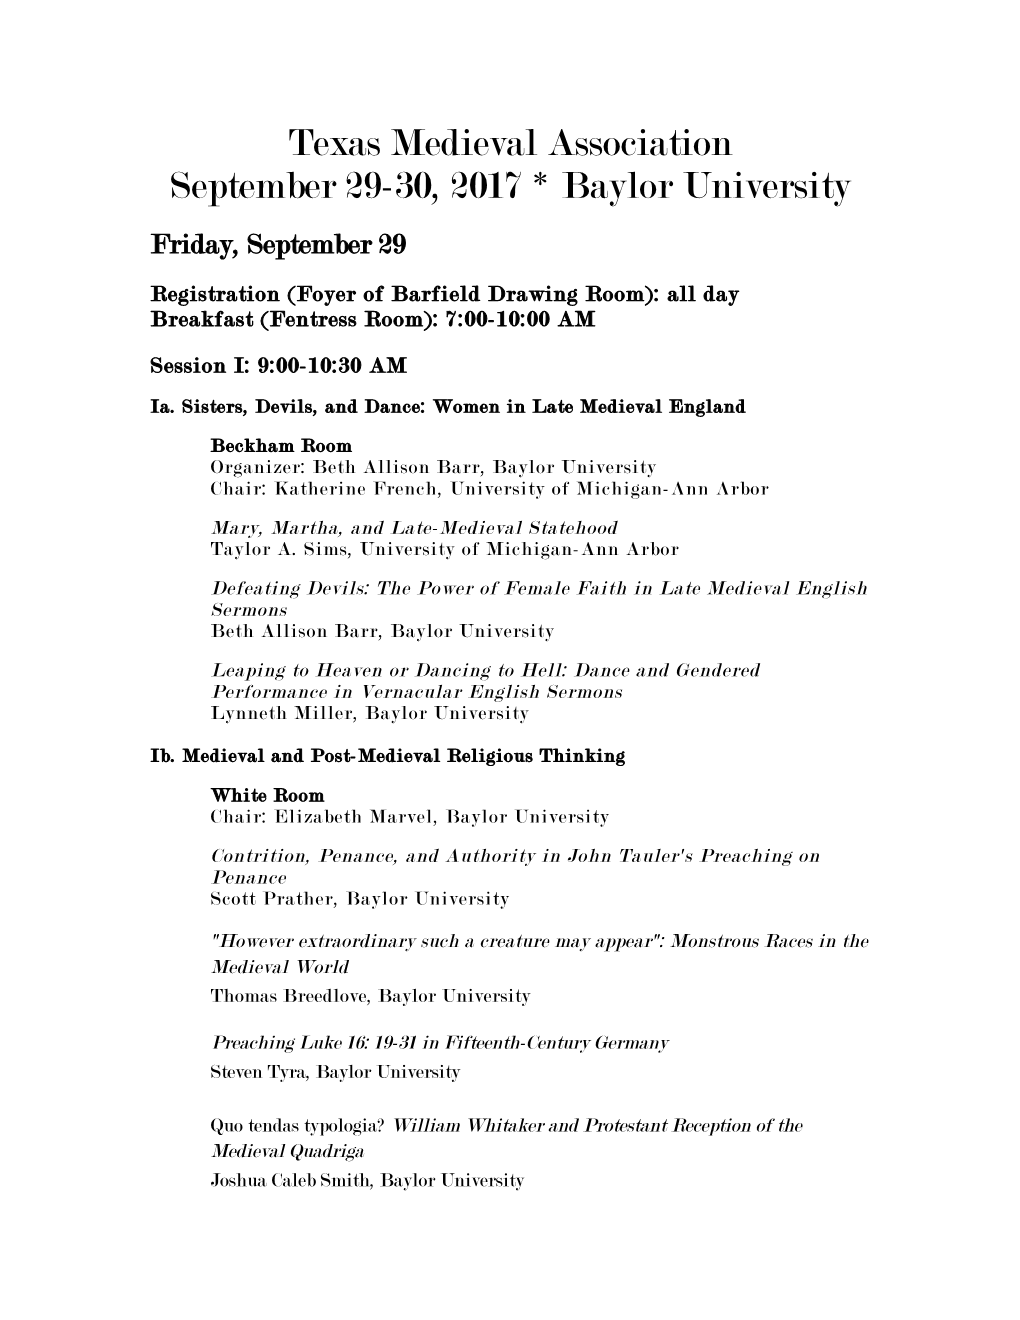 Texas Medieval Association September 29-30, 2017 * Baylor University